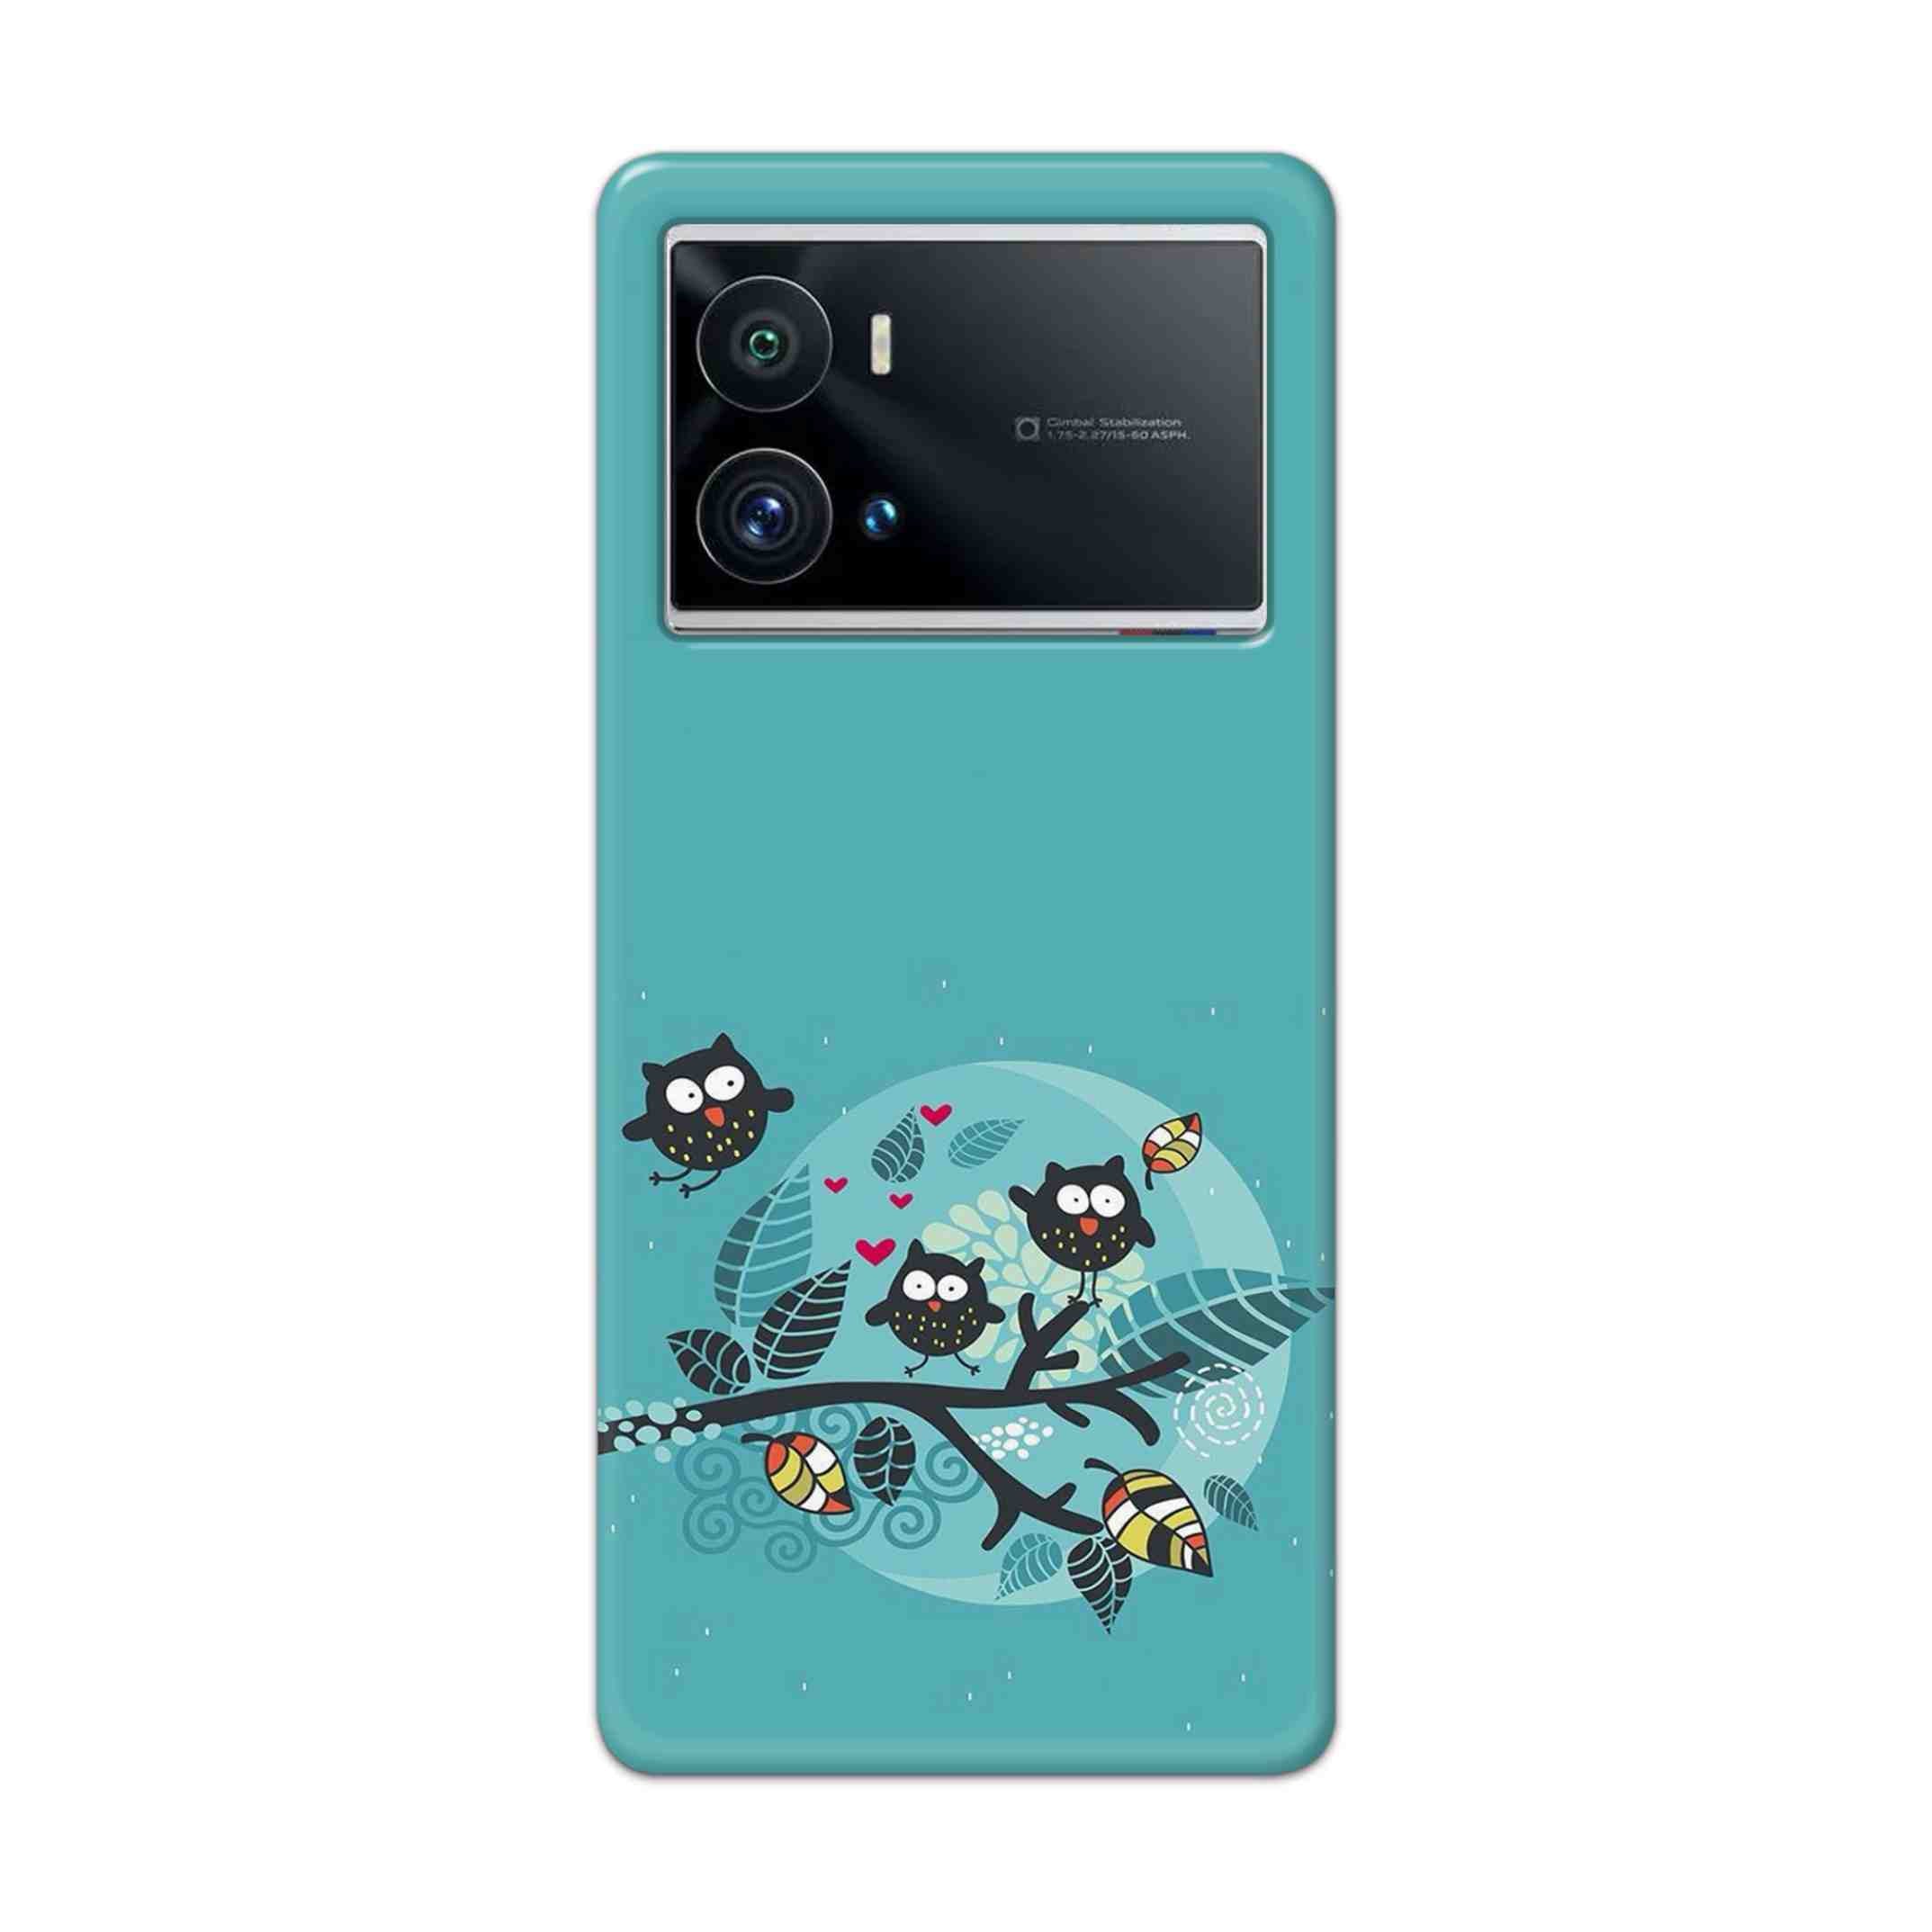 Buy Owl Hard Back Mobile Phone Case Cover For iQOO 9 Pro 5G Online